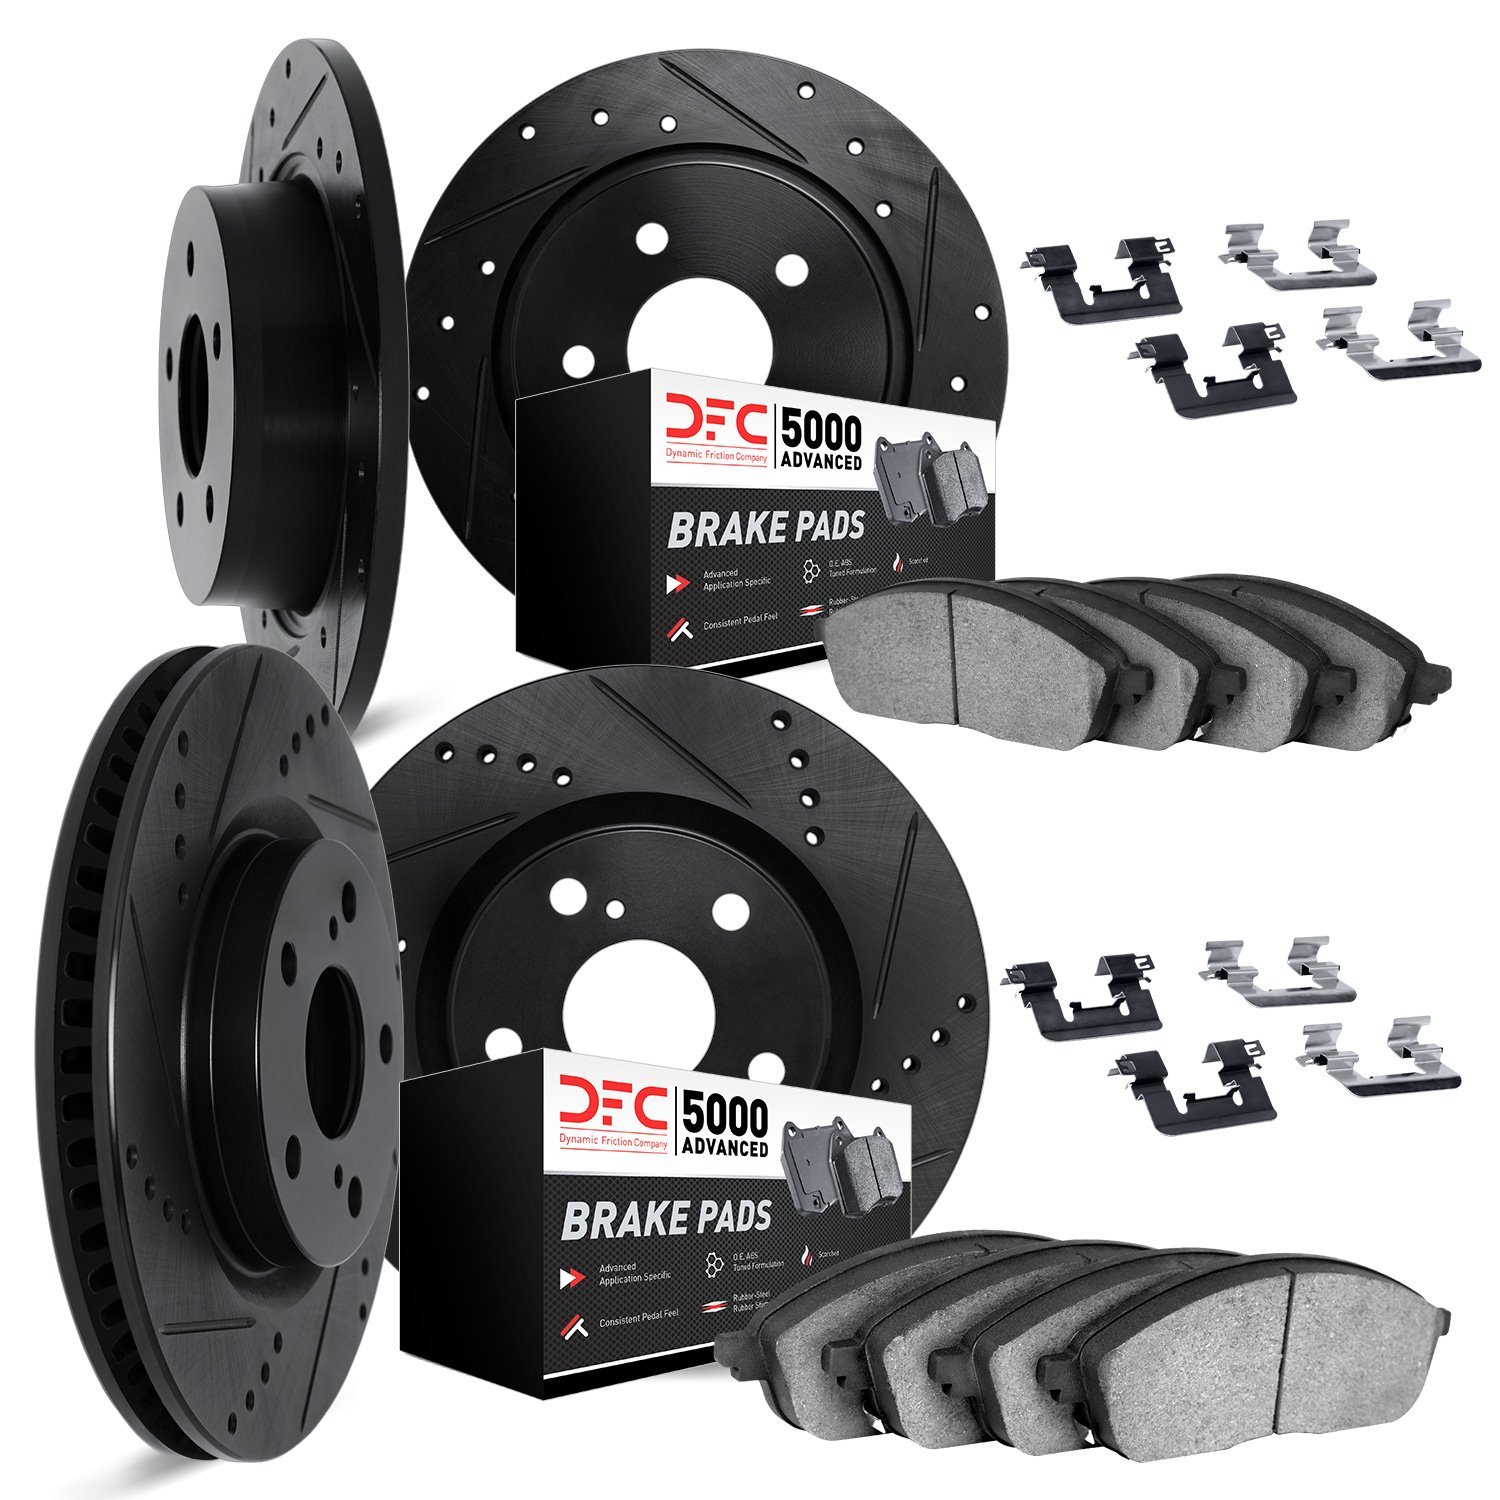 8514-39016 Drilled/Slotted Brake Rotors w/5000 Advanced Brake Pads Kit & Hardware [Black], 2004-2008 Mopar, Position: Front and